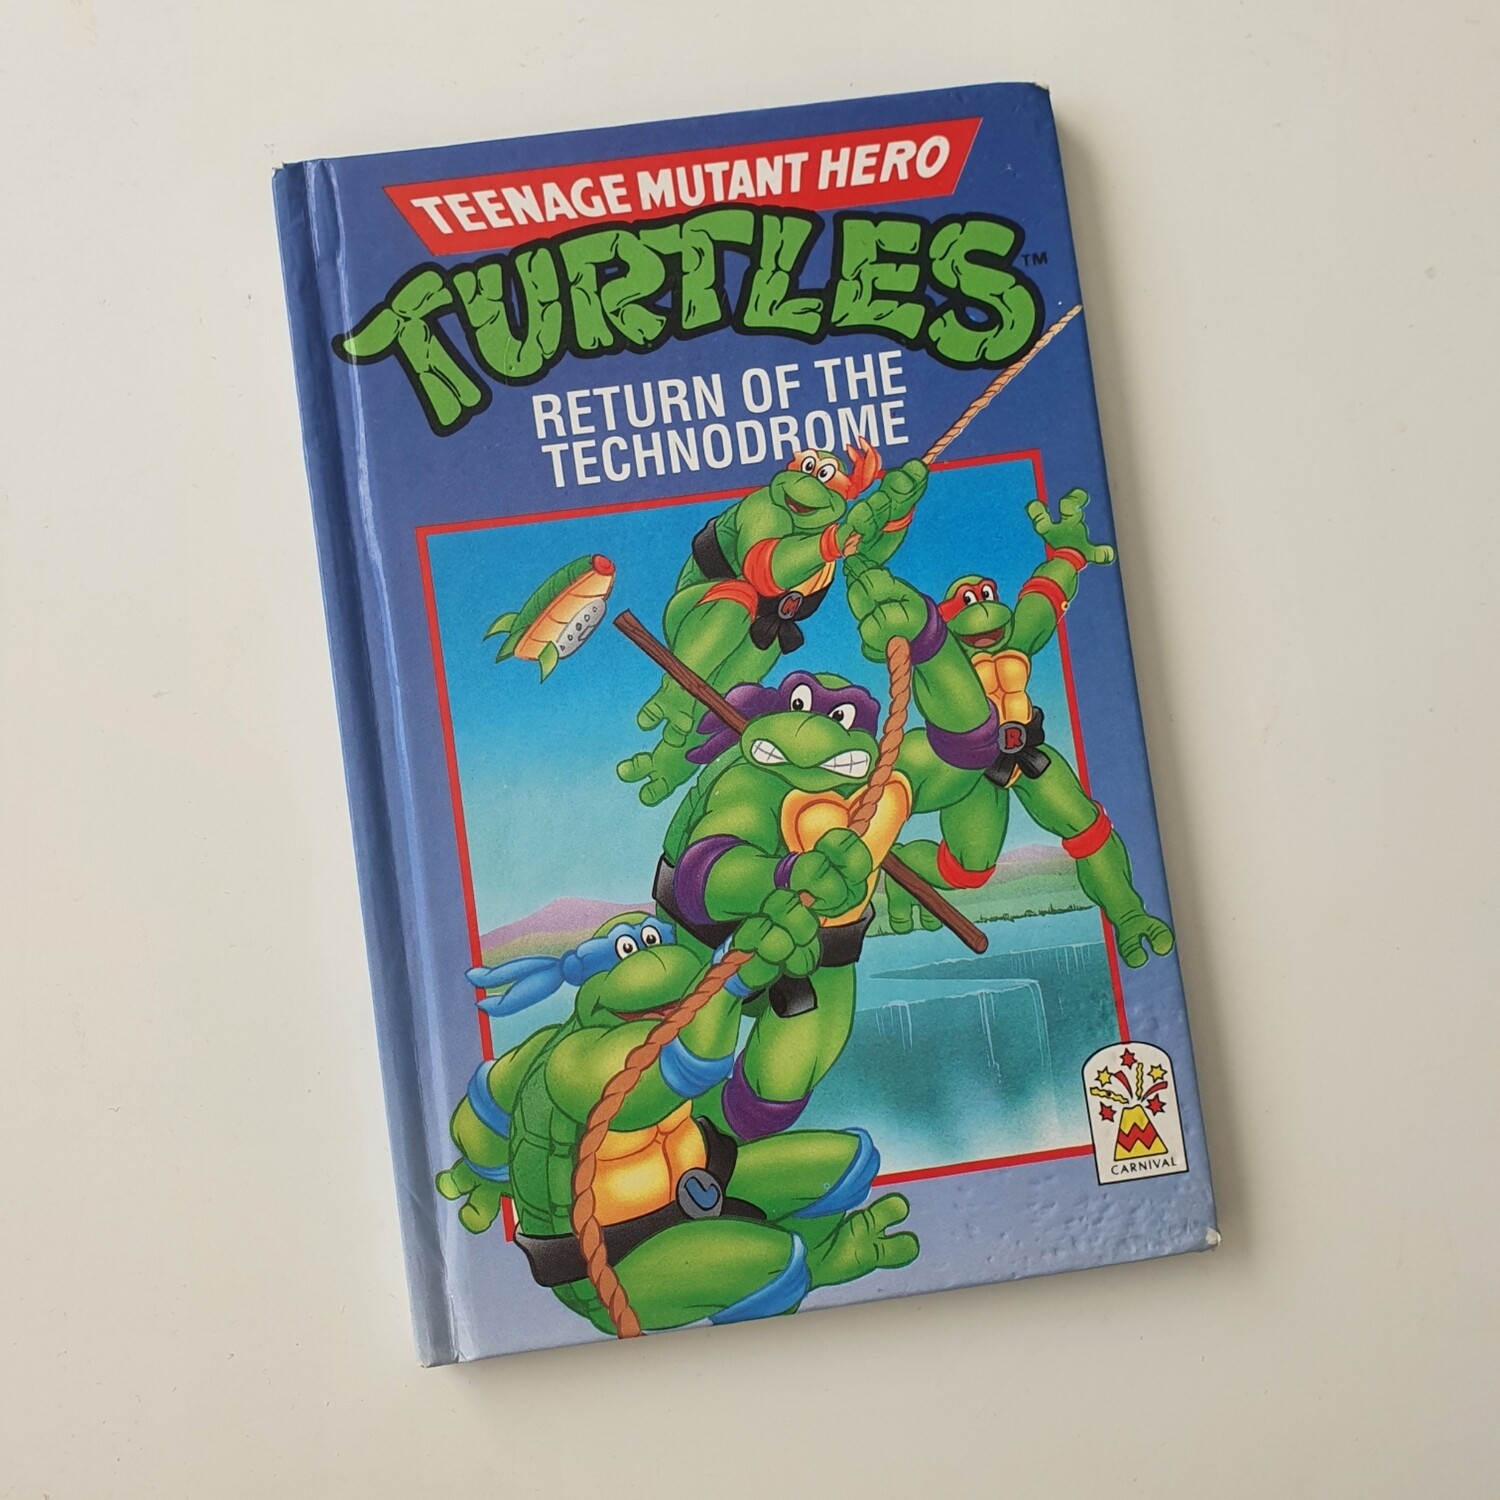 Teenage Mutant Hero Turtles - Return of the Technodrome